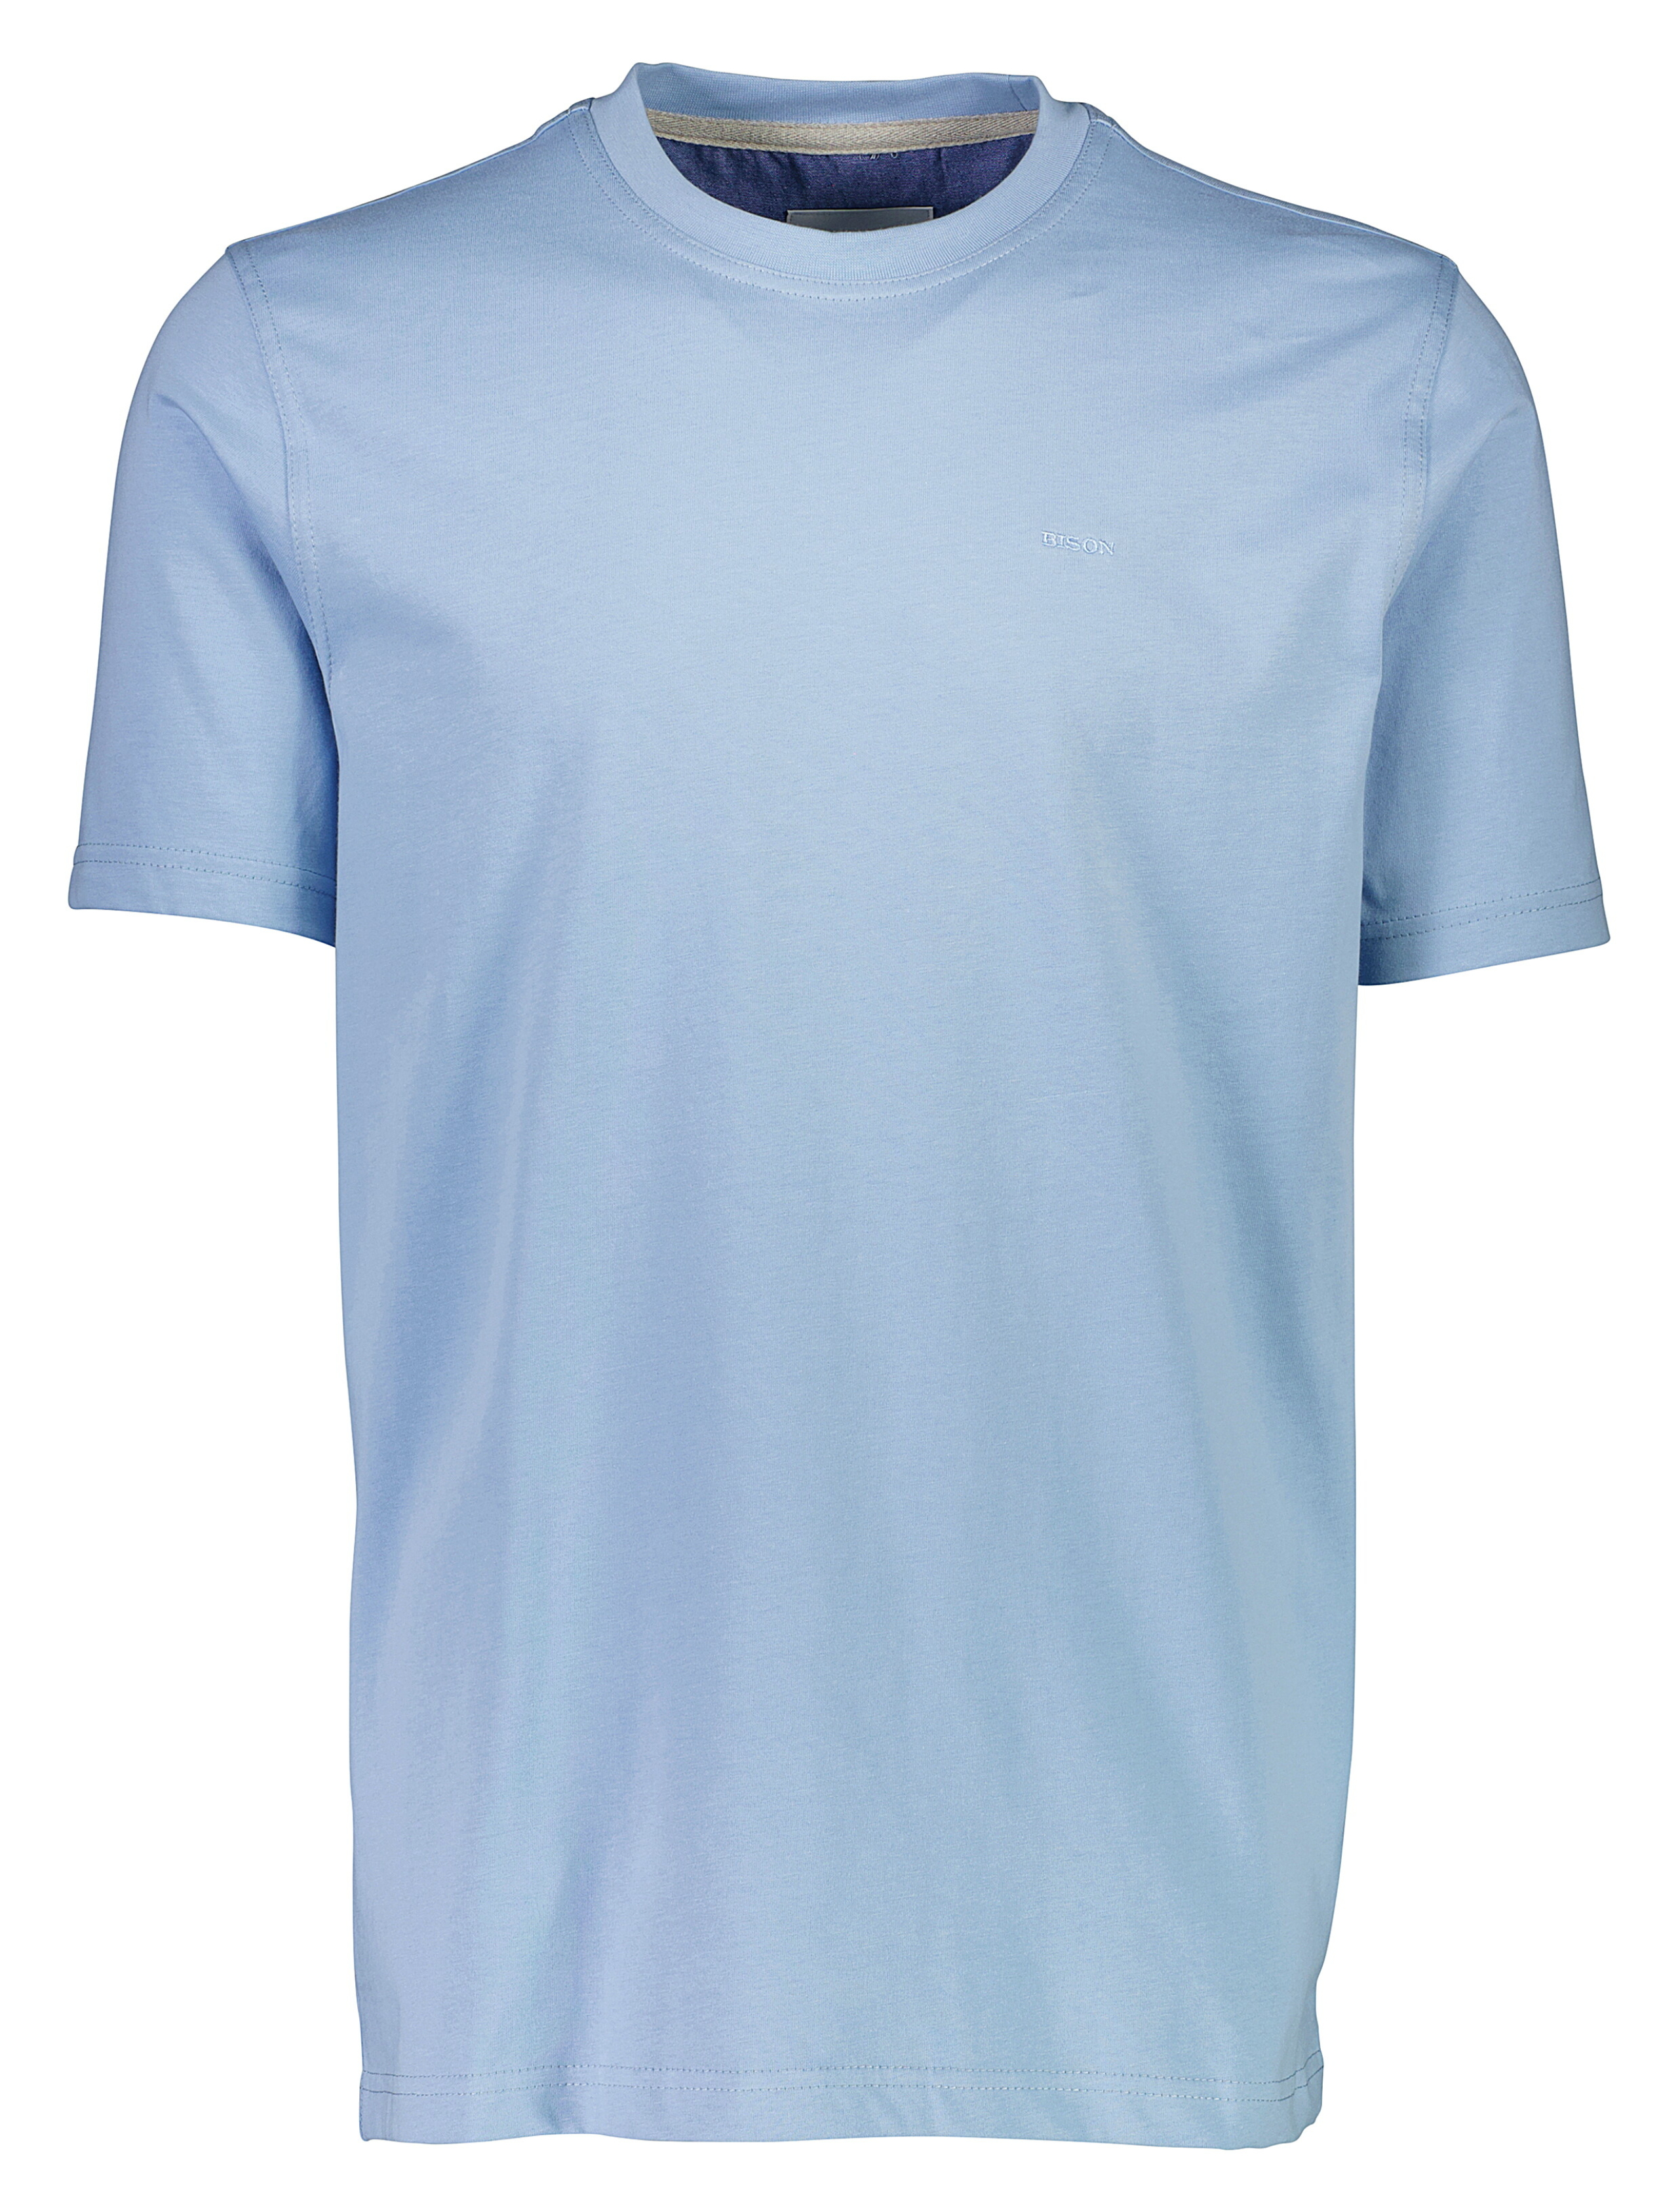 Bison T-shirt blå / lake blue